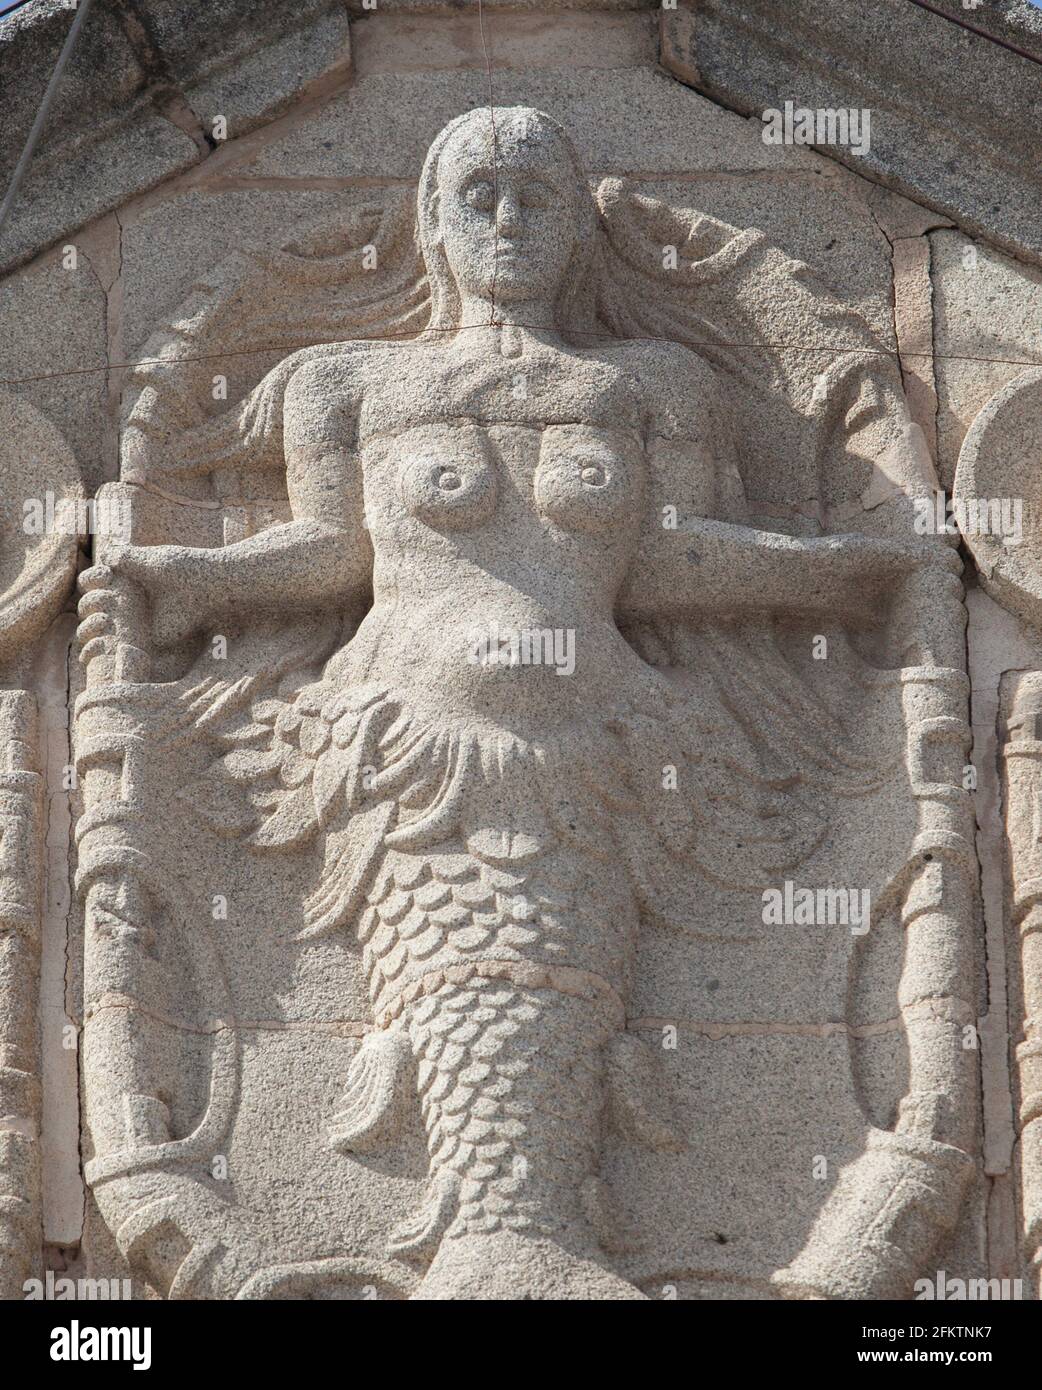 Wappen mit Meerjungfrauen-Relief in Villanueva de la Serena, Badajoz, Spanien. Dieses mythologische Wesen ist das Symbol des Dorfes. Stockfoto